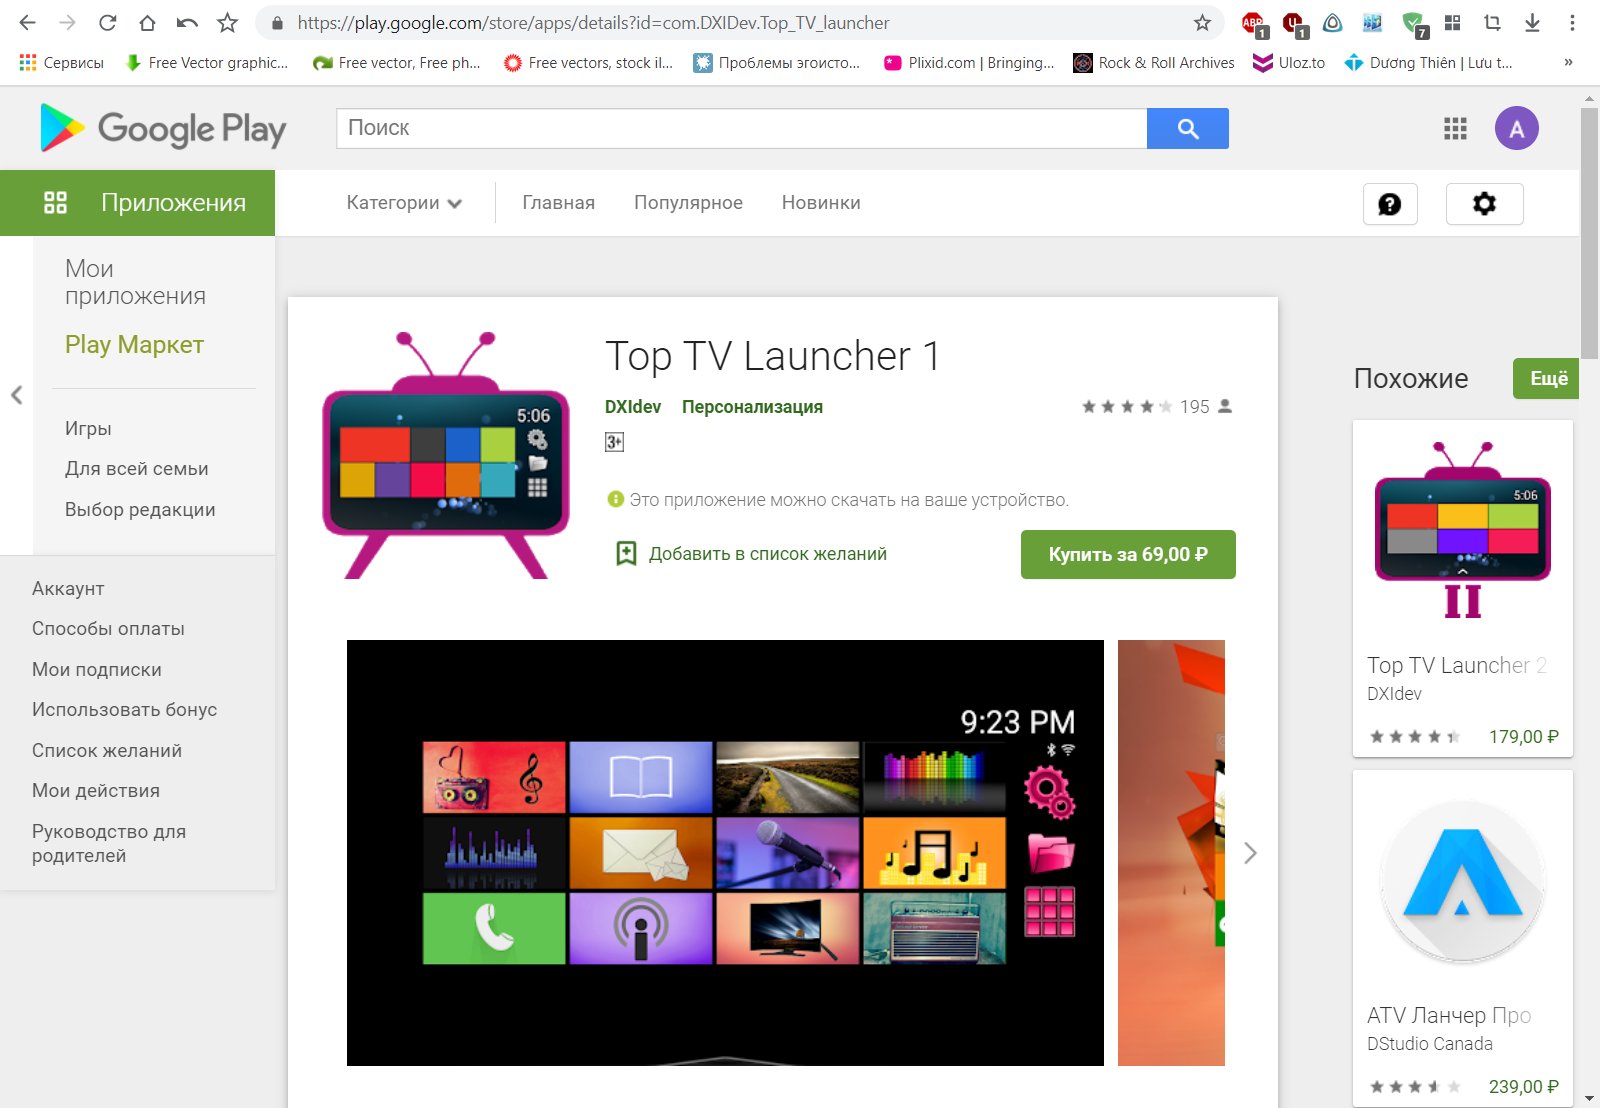 TopTV launcher Playmarket.png